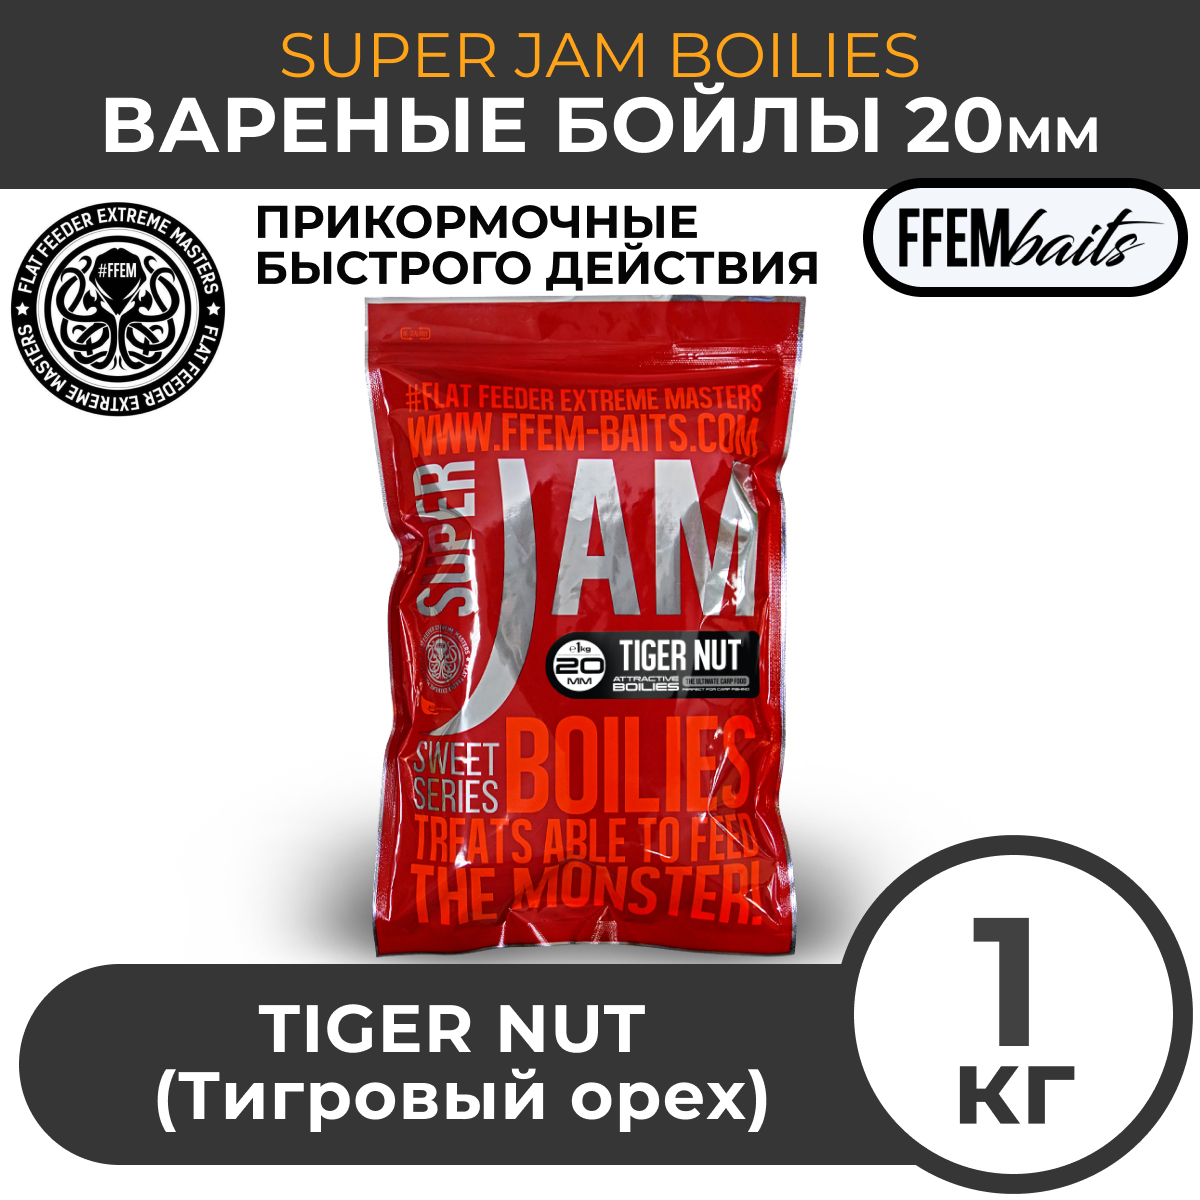 Бойлы варёные FFEM SUPER JAM TIGER NUT тигровый орех  20 мм 1 кг / Zip-lock пакет / Бойлы вареные прикормочные / Бойлы закормочные вареные / чуфа